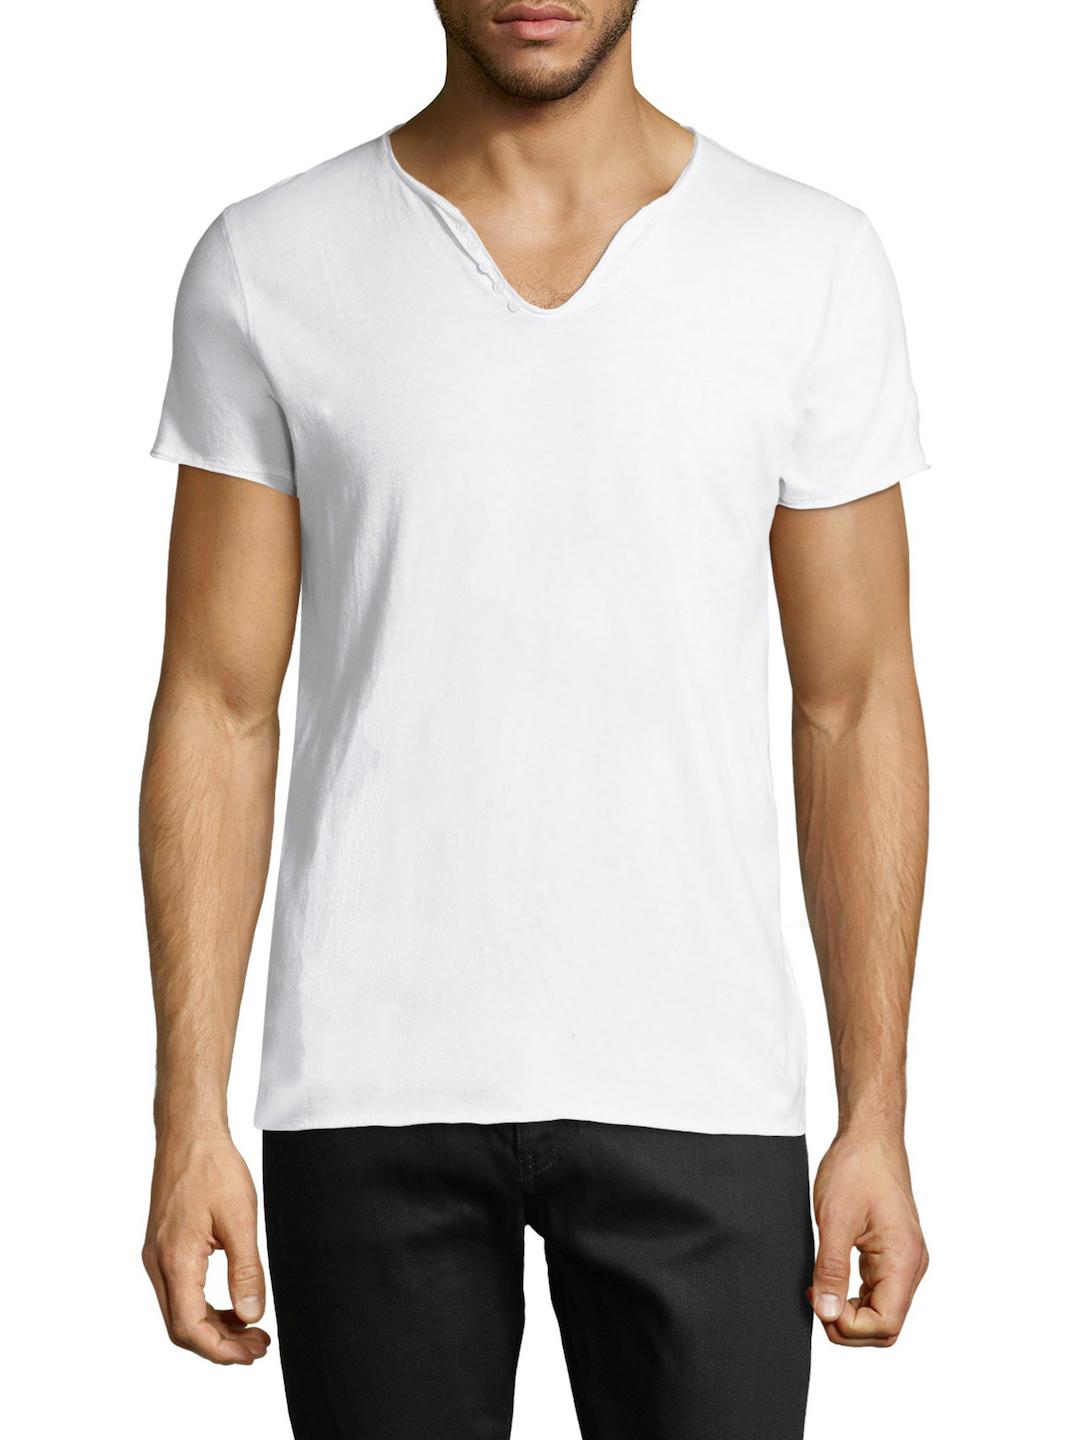 Lyst - Zadig & Voltaire Monastir Mc Print Tee Shirt Cotton in White for Men